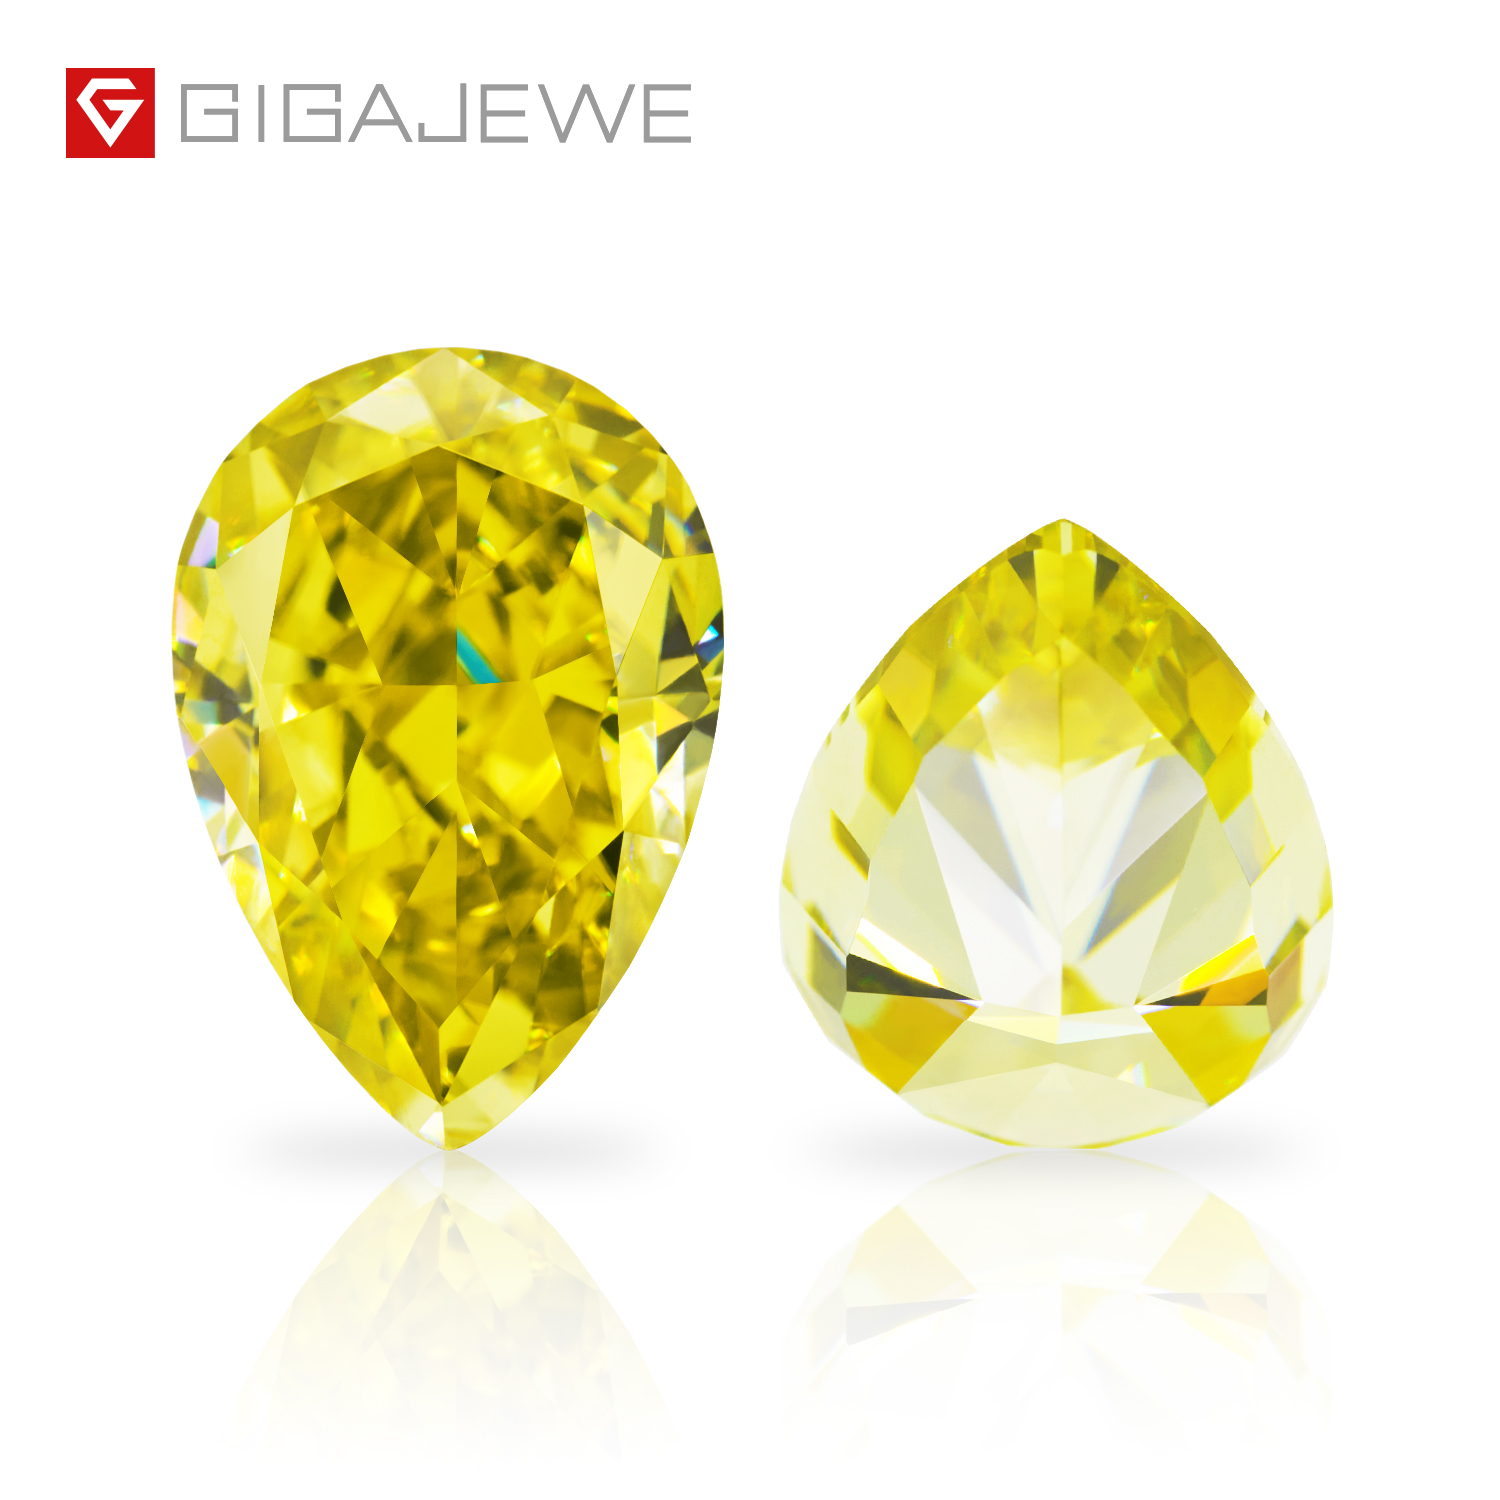 GIGAJEWE 定制碎冰梨形切割鲜黄色 VVS1 莫桑石裸钻测试通过宝石用于珠宝制作